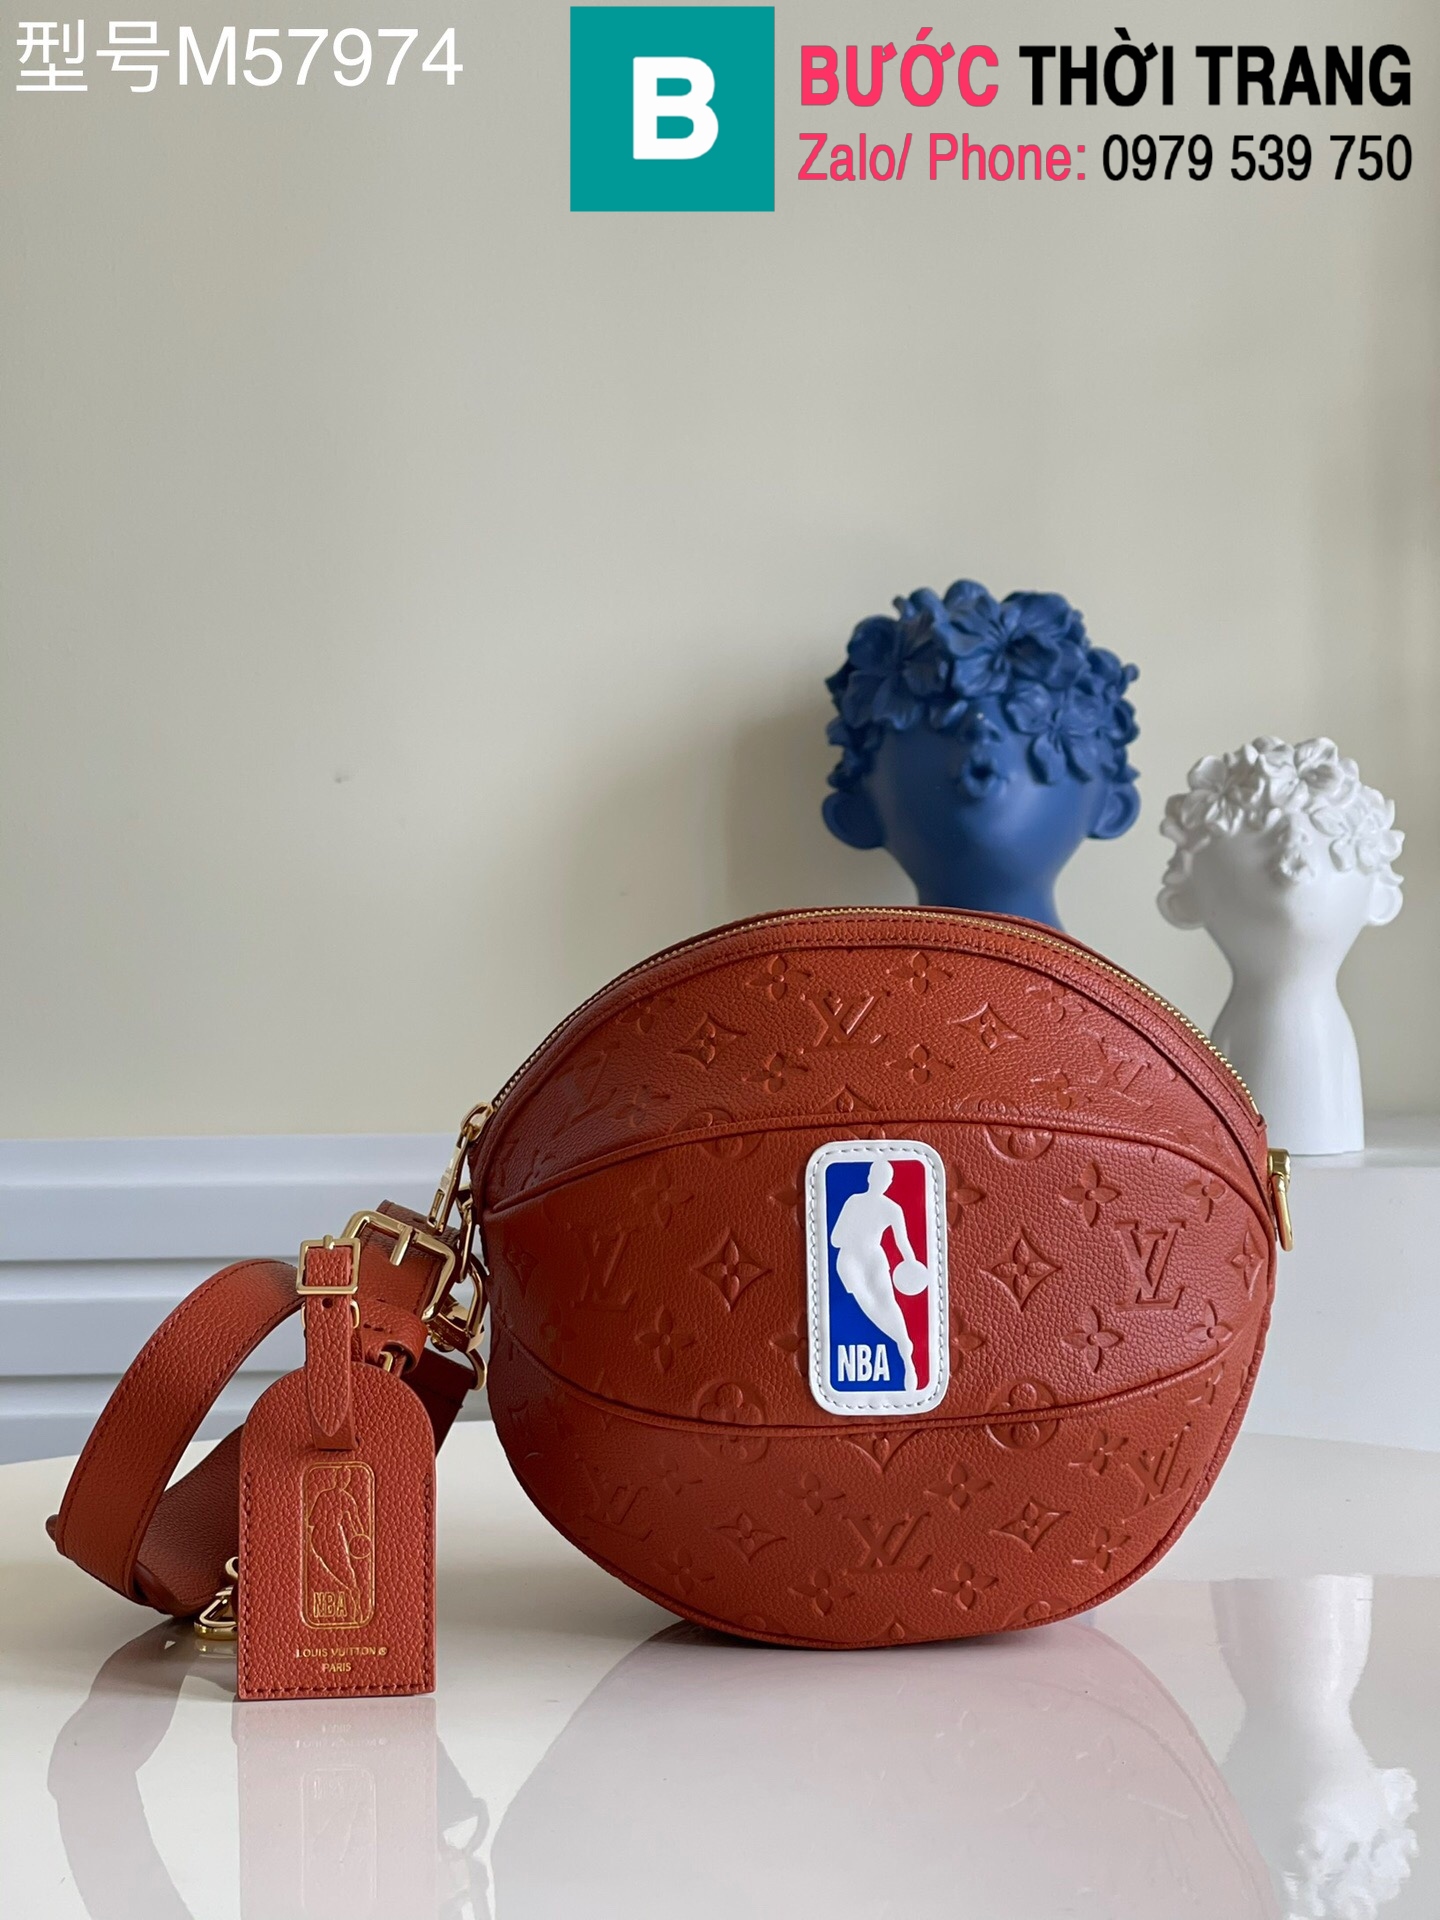 Louis Vuitton Lvxnba Ball In Basket